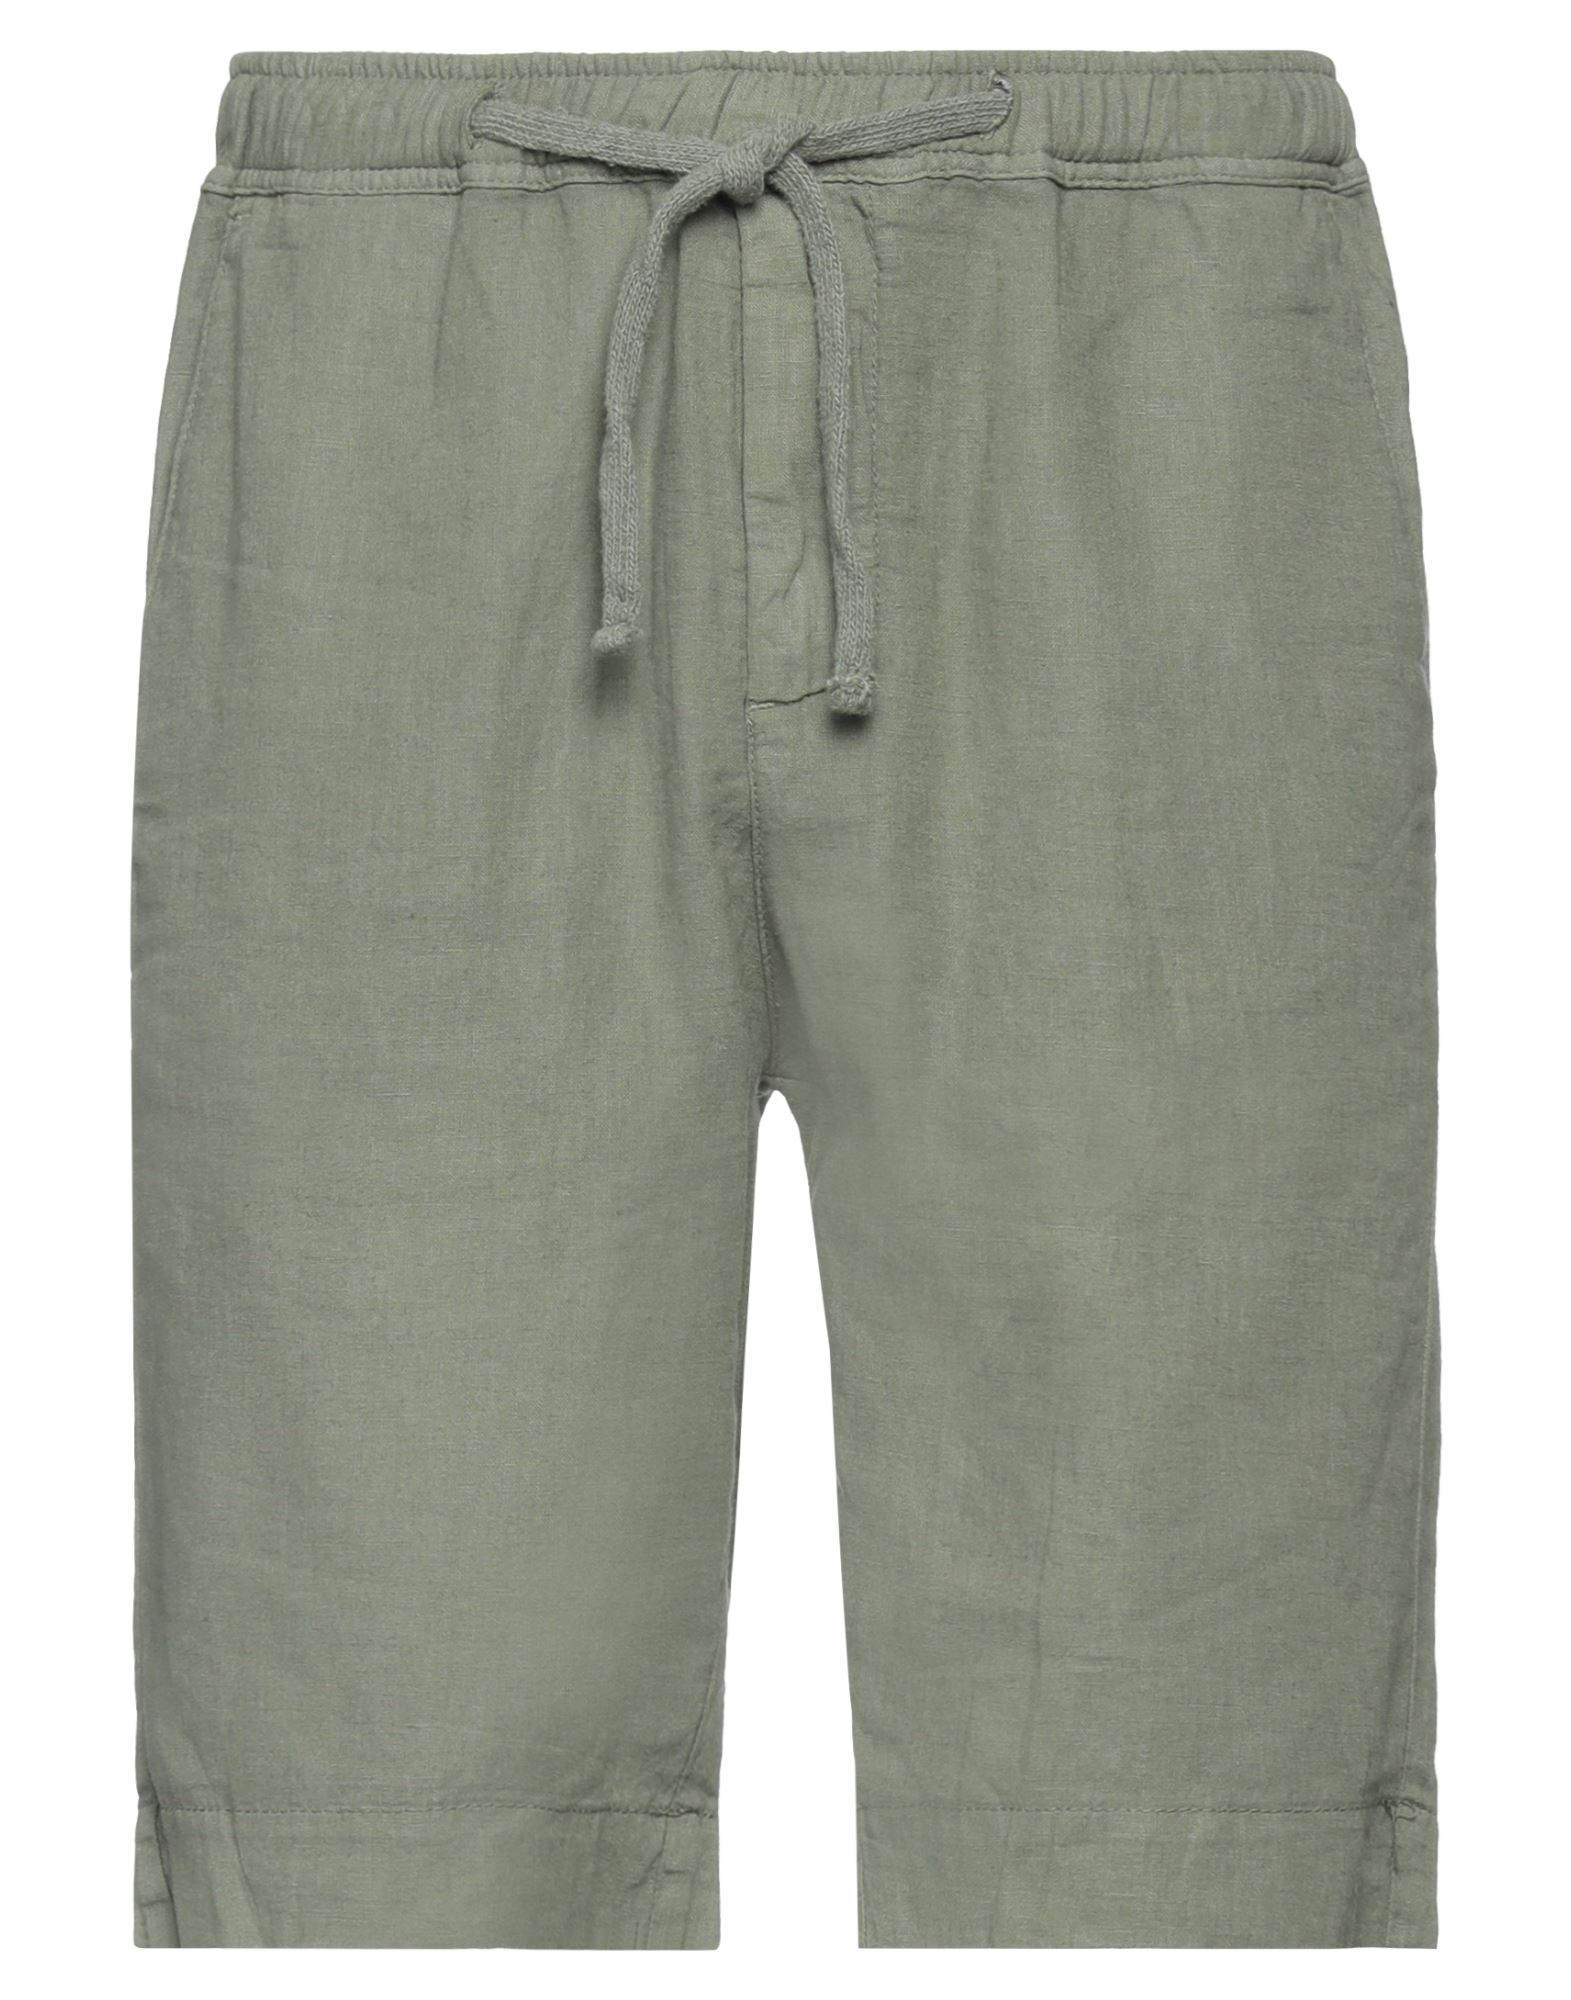 Censured Man Shorts & Bermuda Shorts Military Green Size 28 Linen